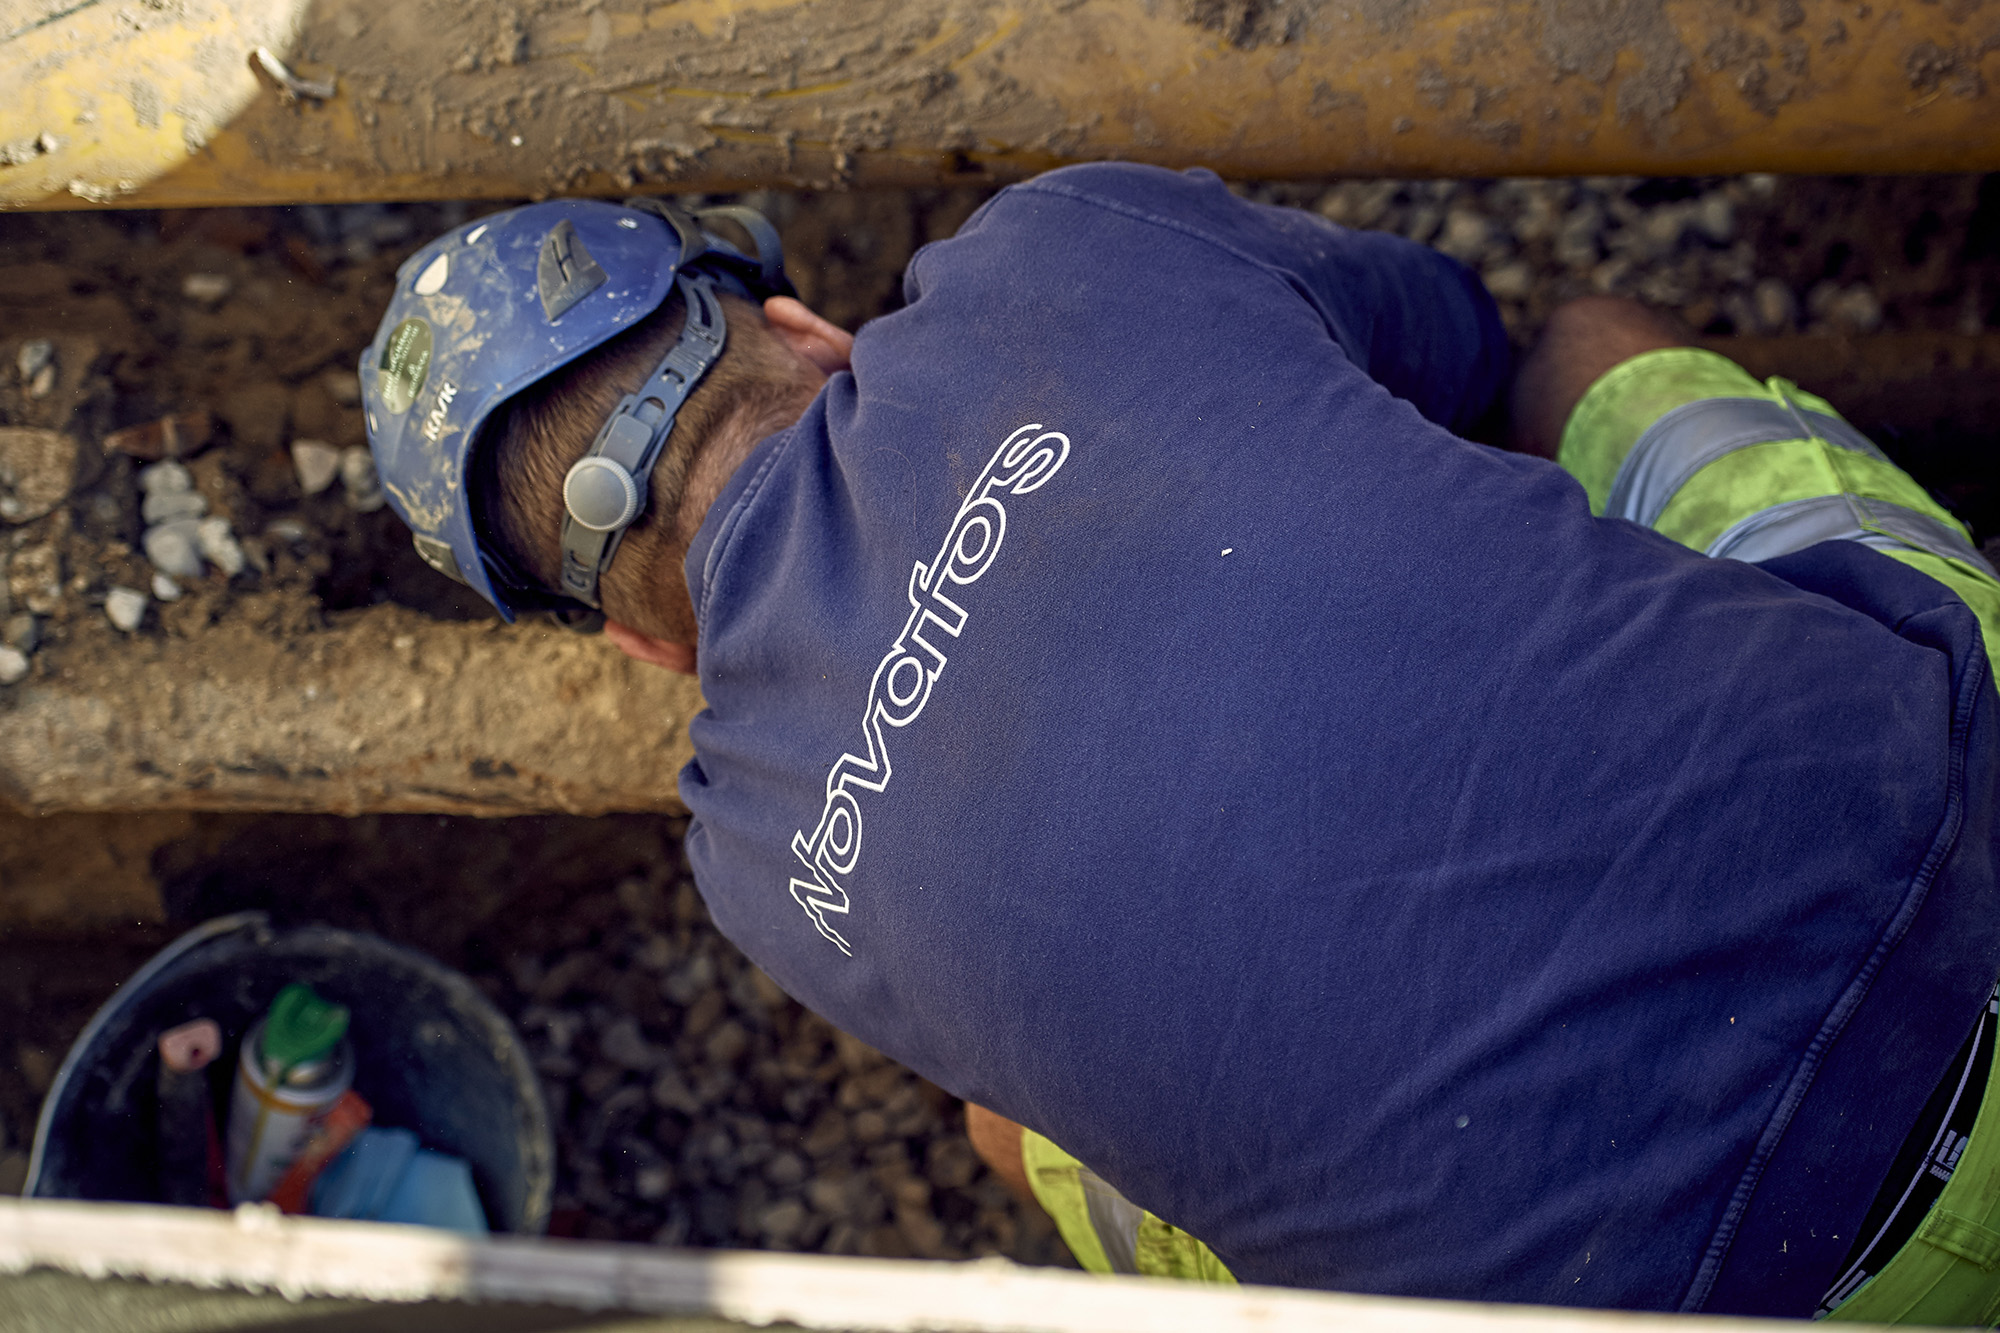 Novafos-medarbejder reparerer en vandledning